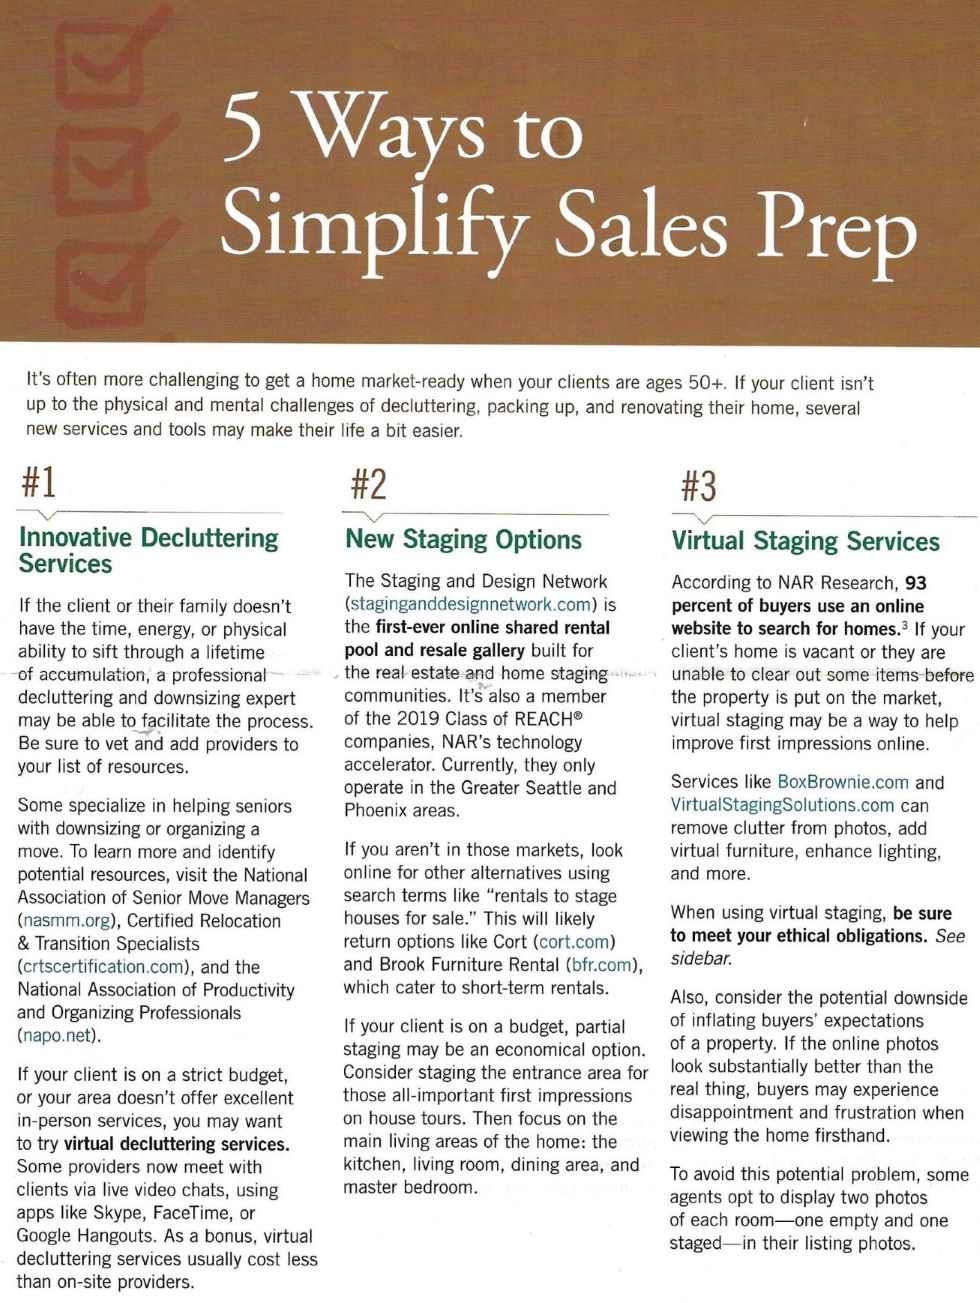 5 Ways to Simplify Sales Prep